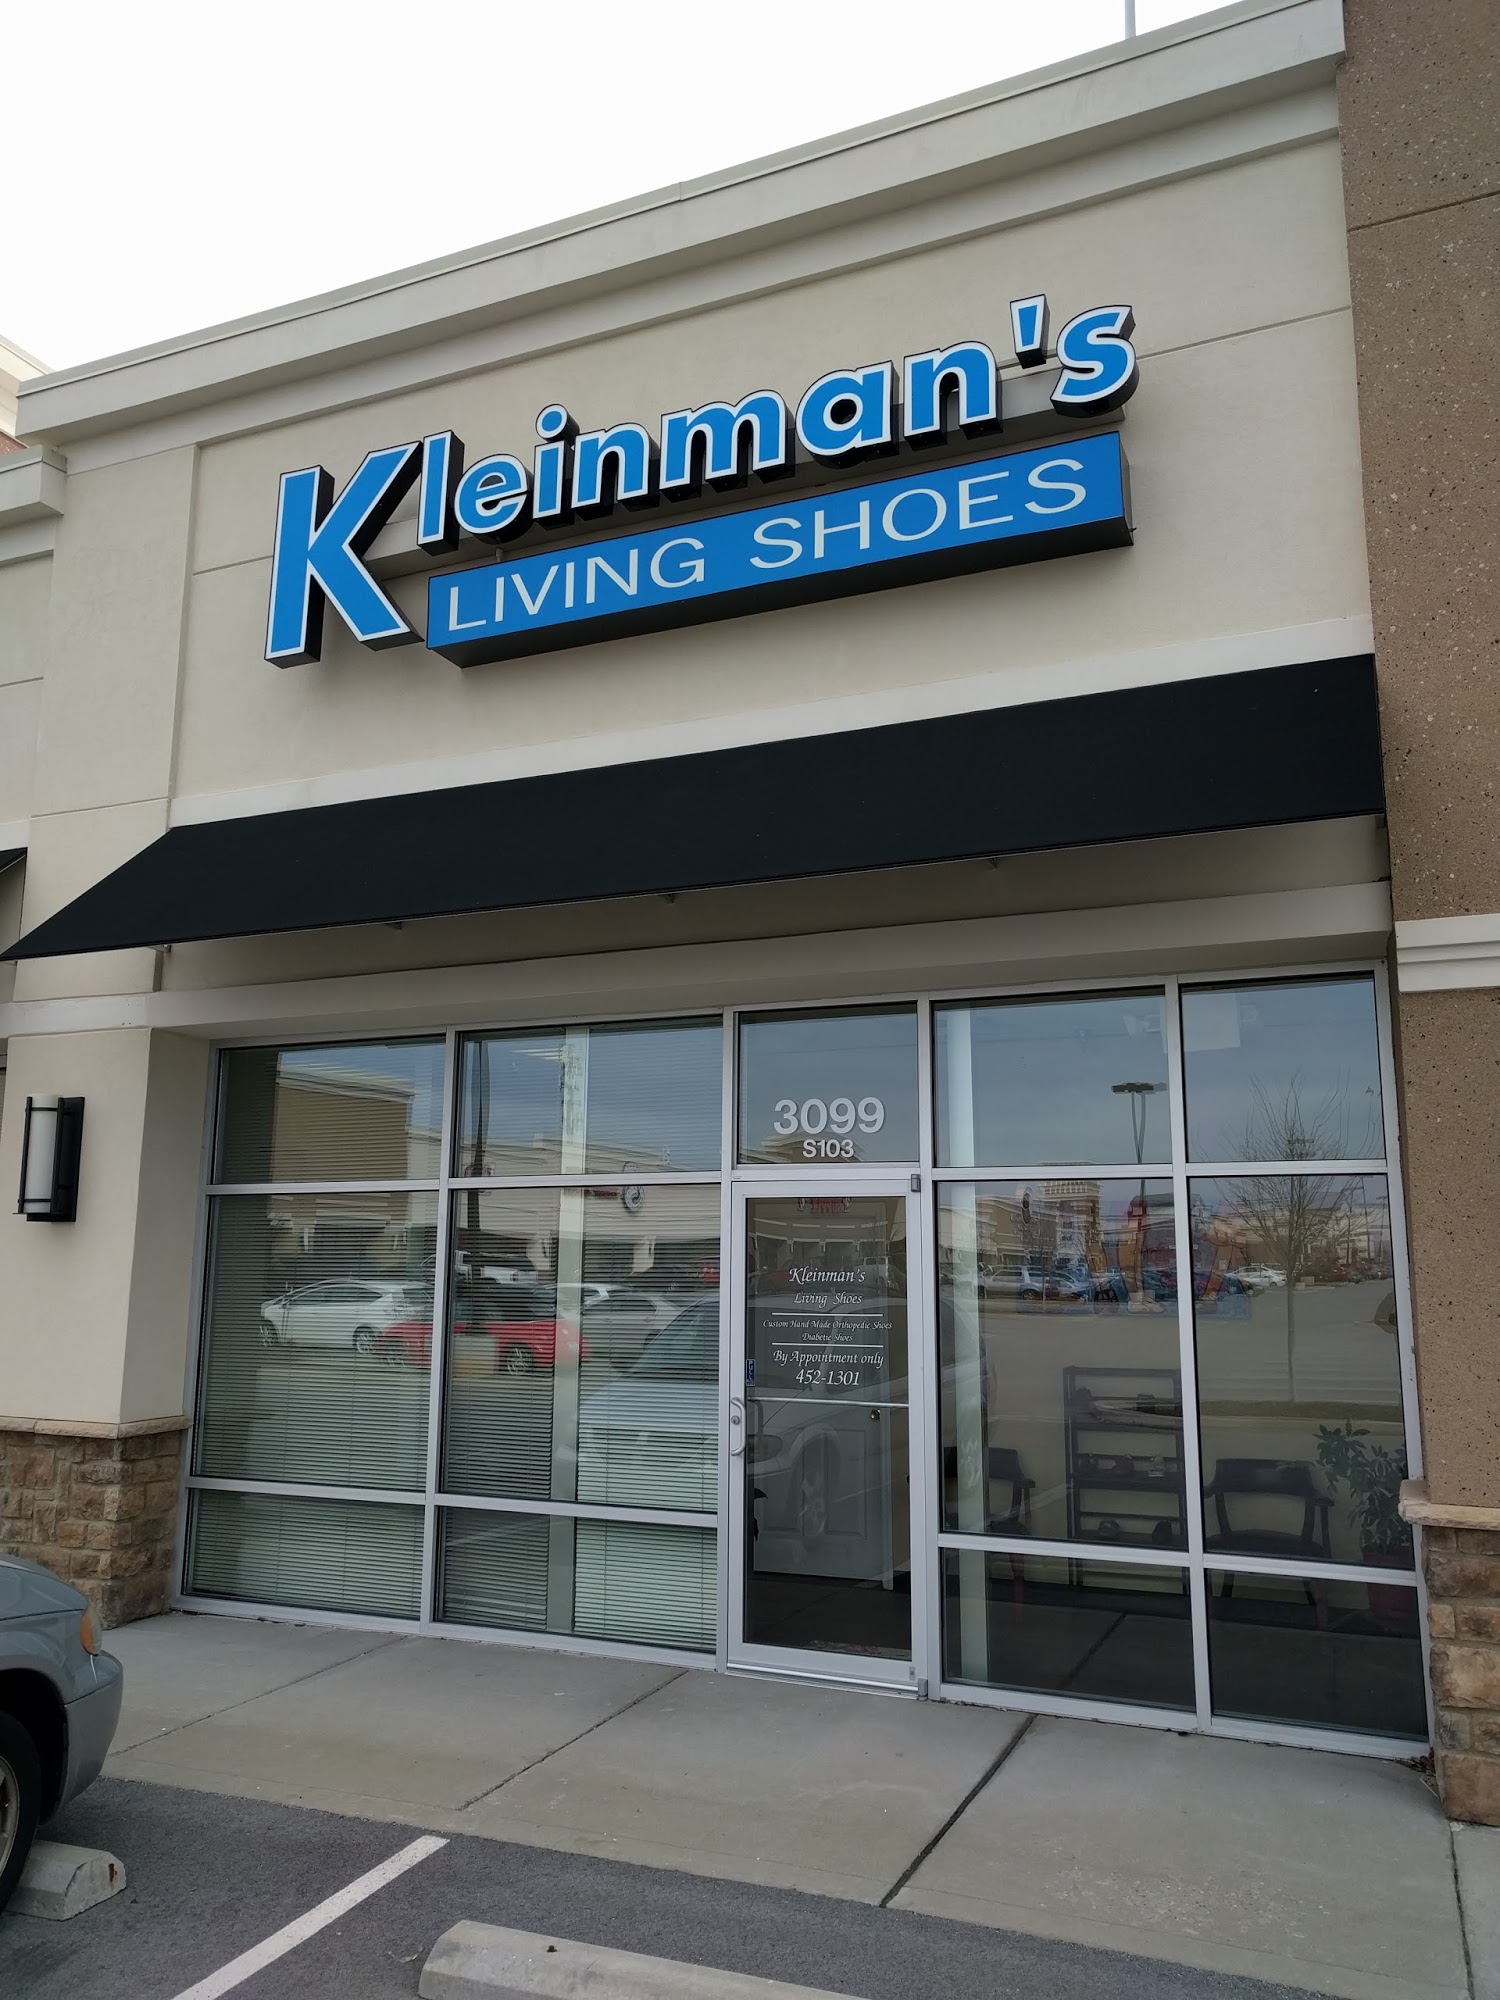 Kleinman's Living Shoes